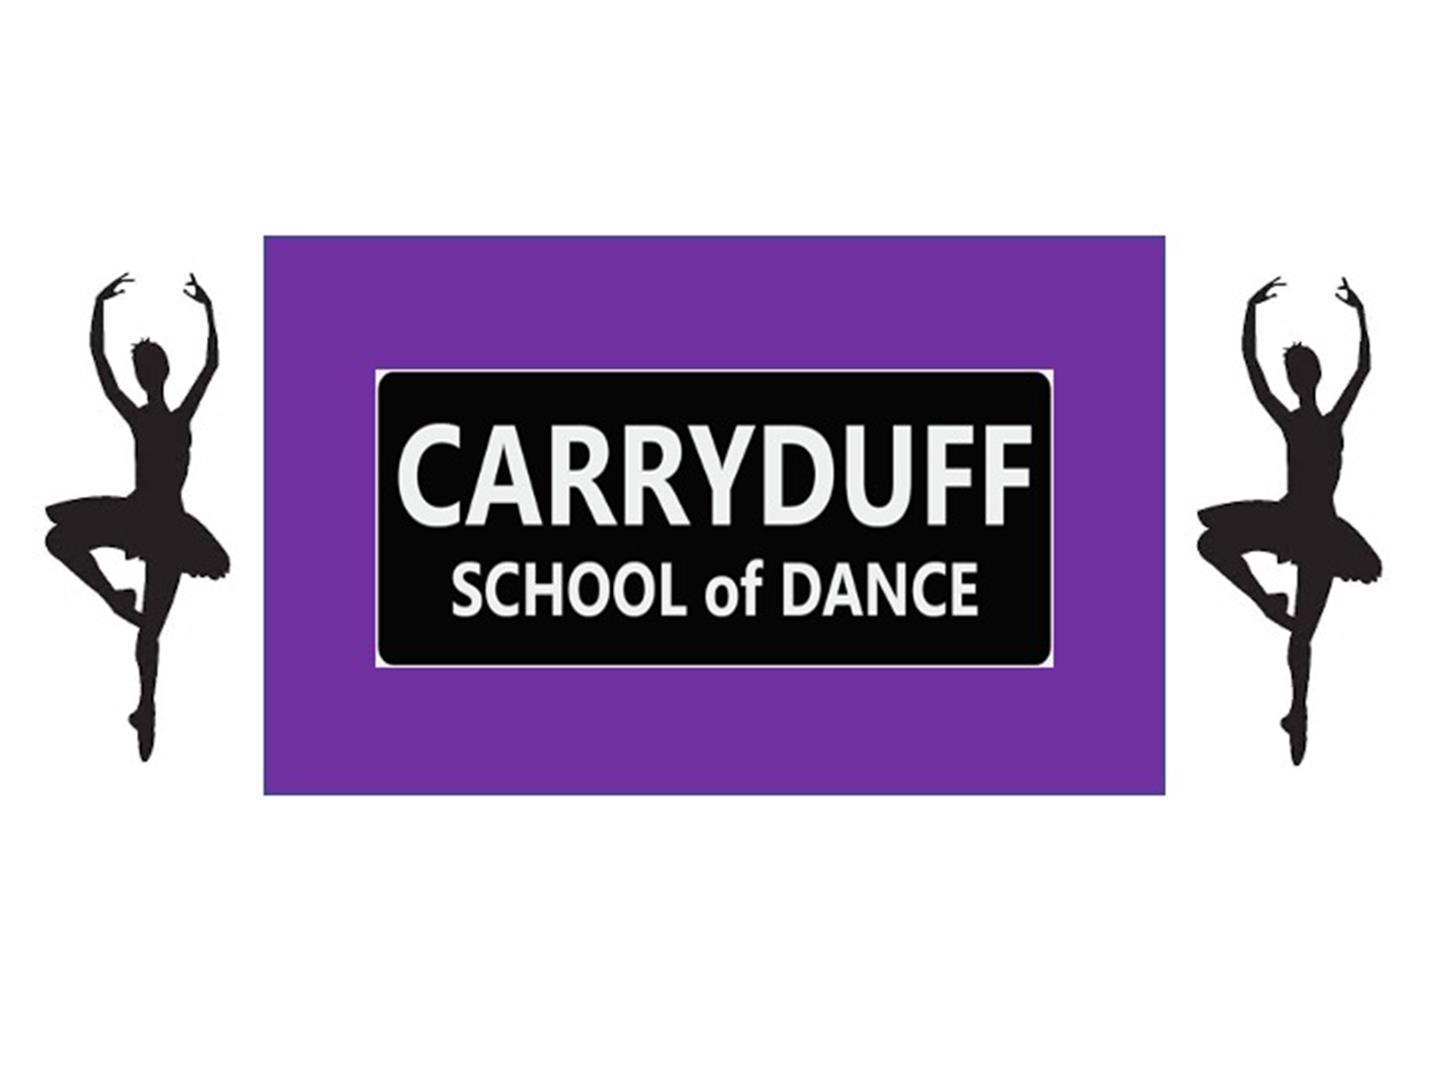 Carryduff School of Dance